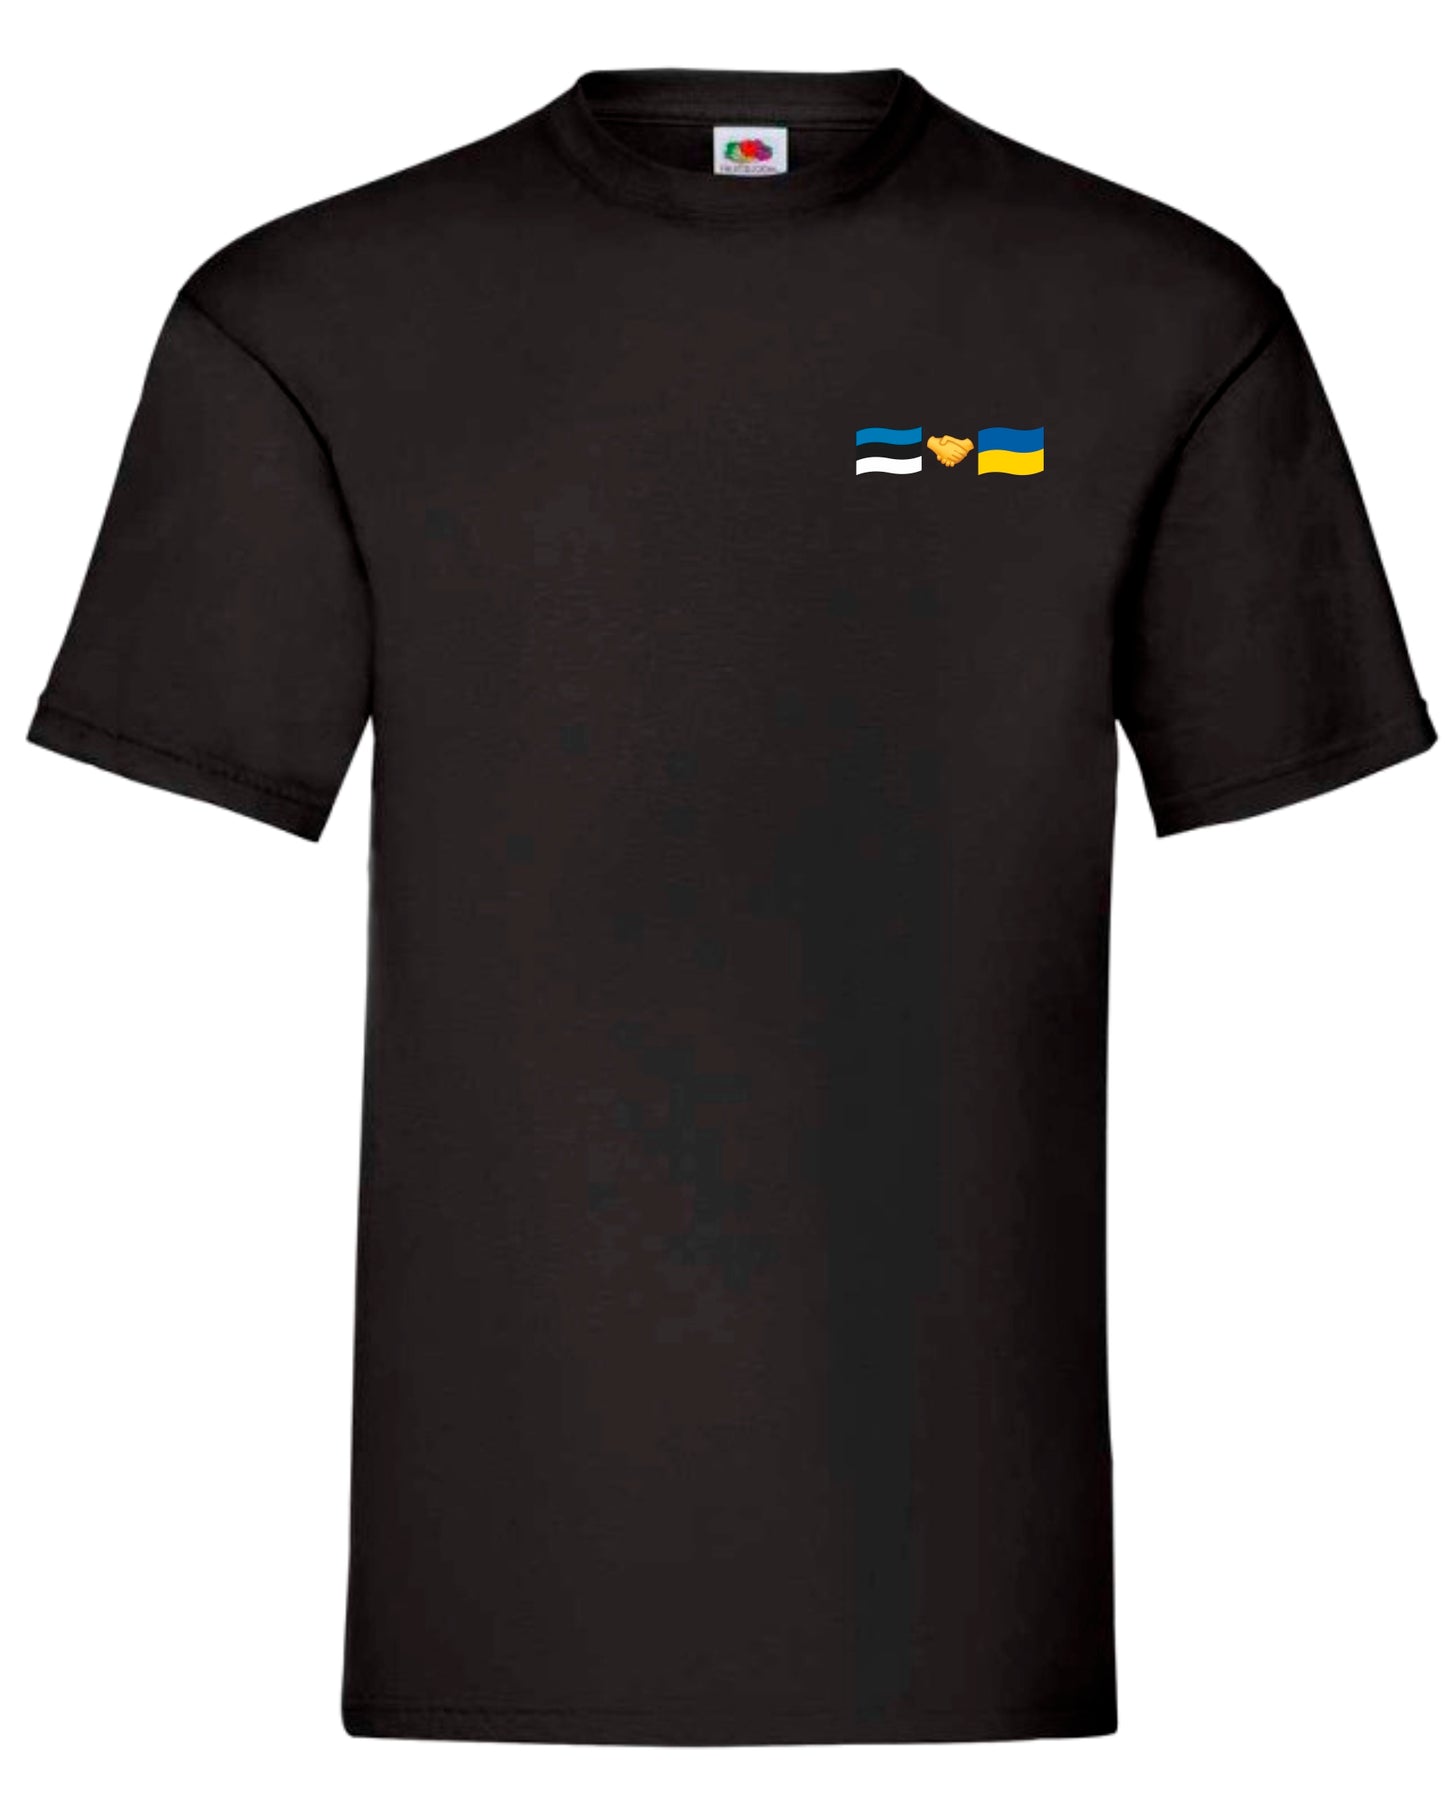 Т-shirt Estonia + Ukraine (small logo)